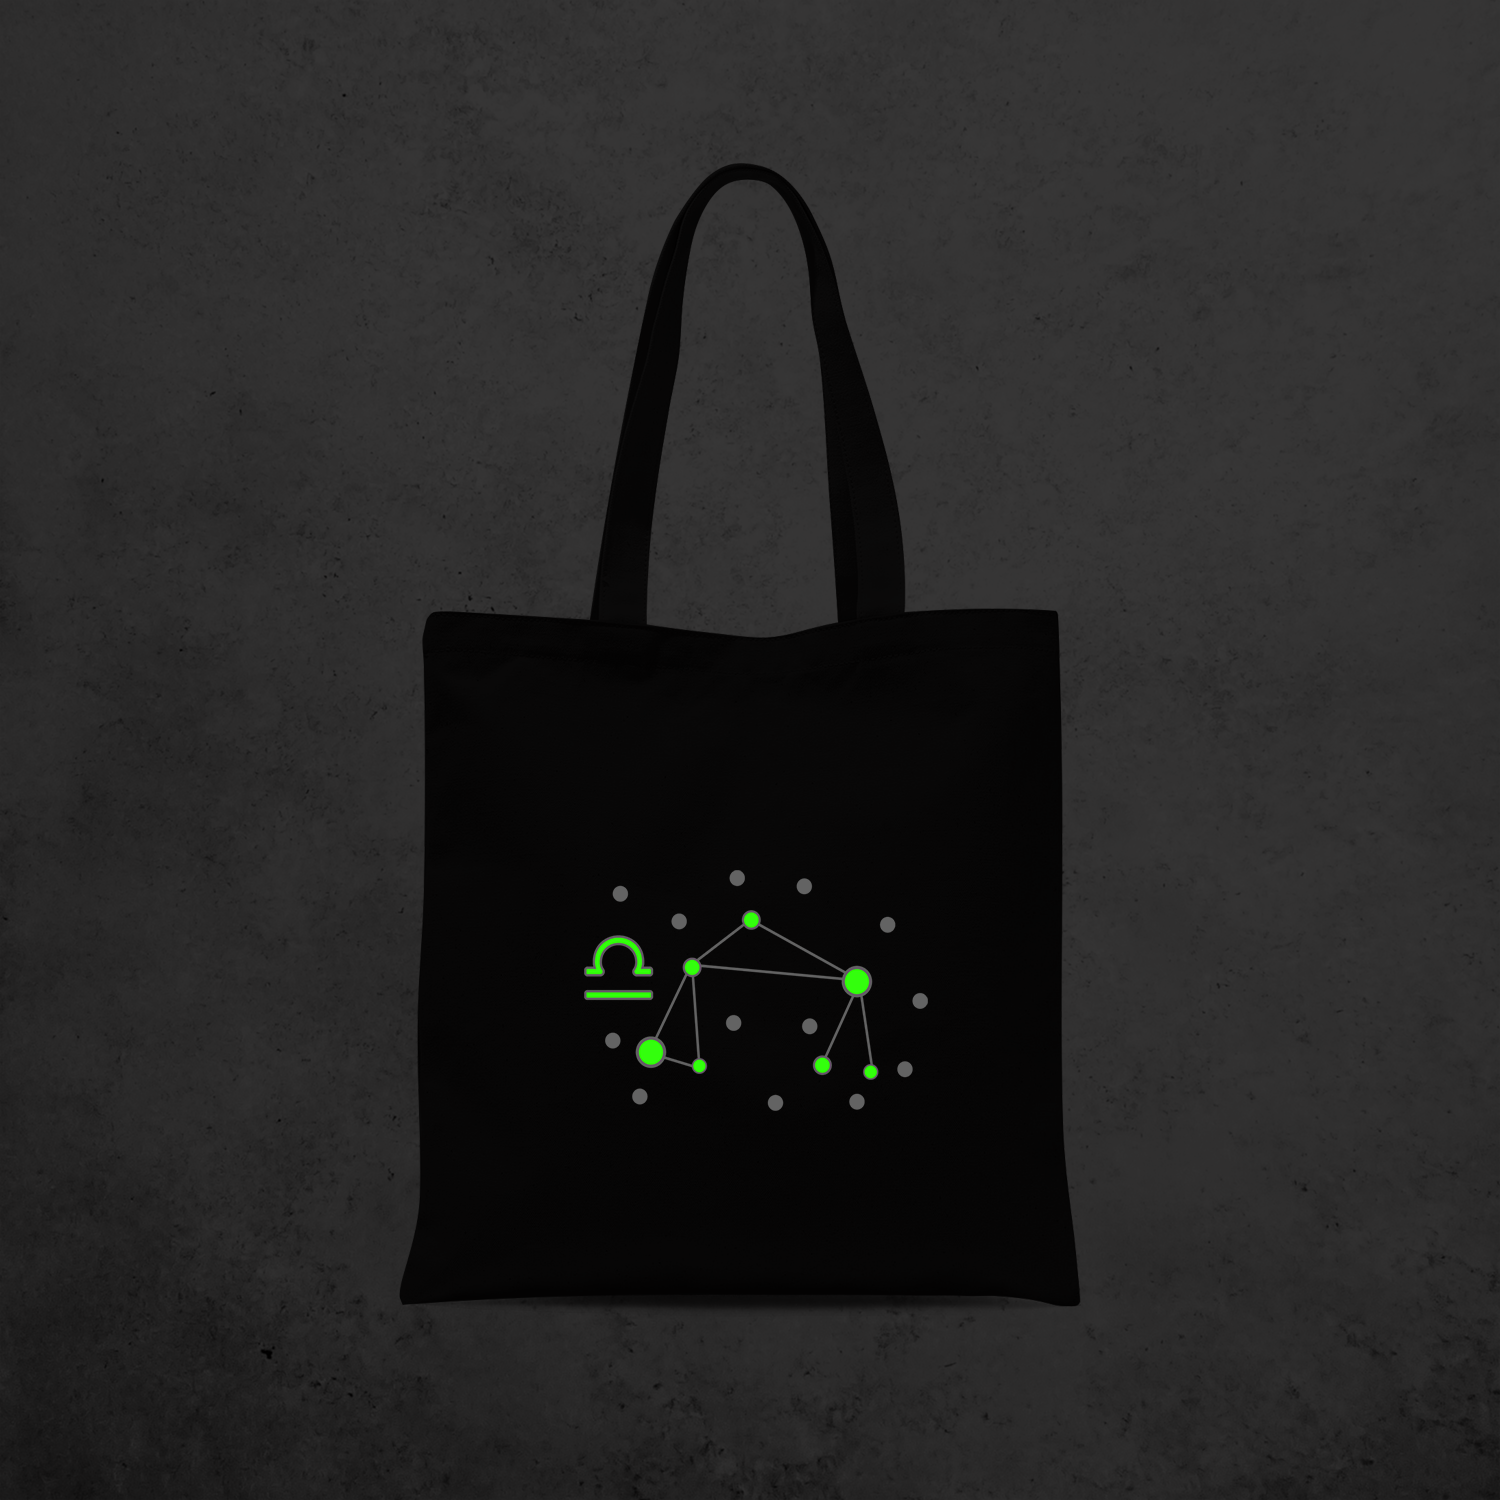 Star sign glow in the dark tote bag